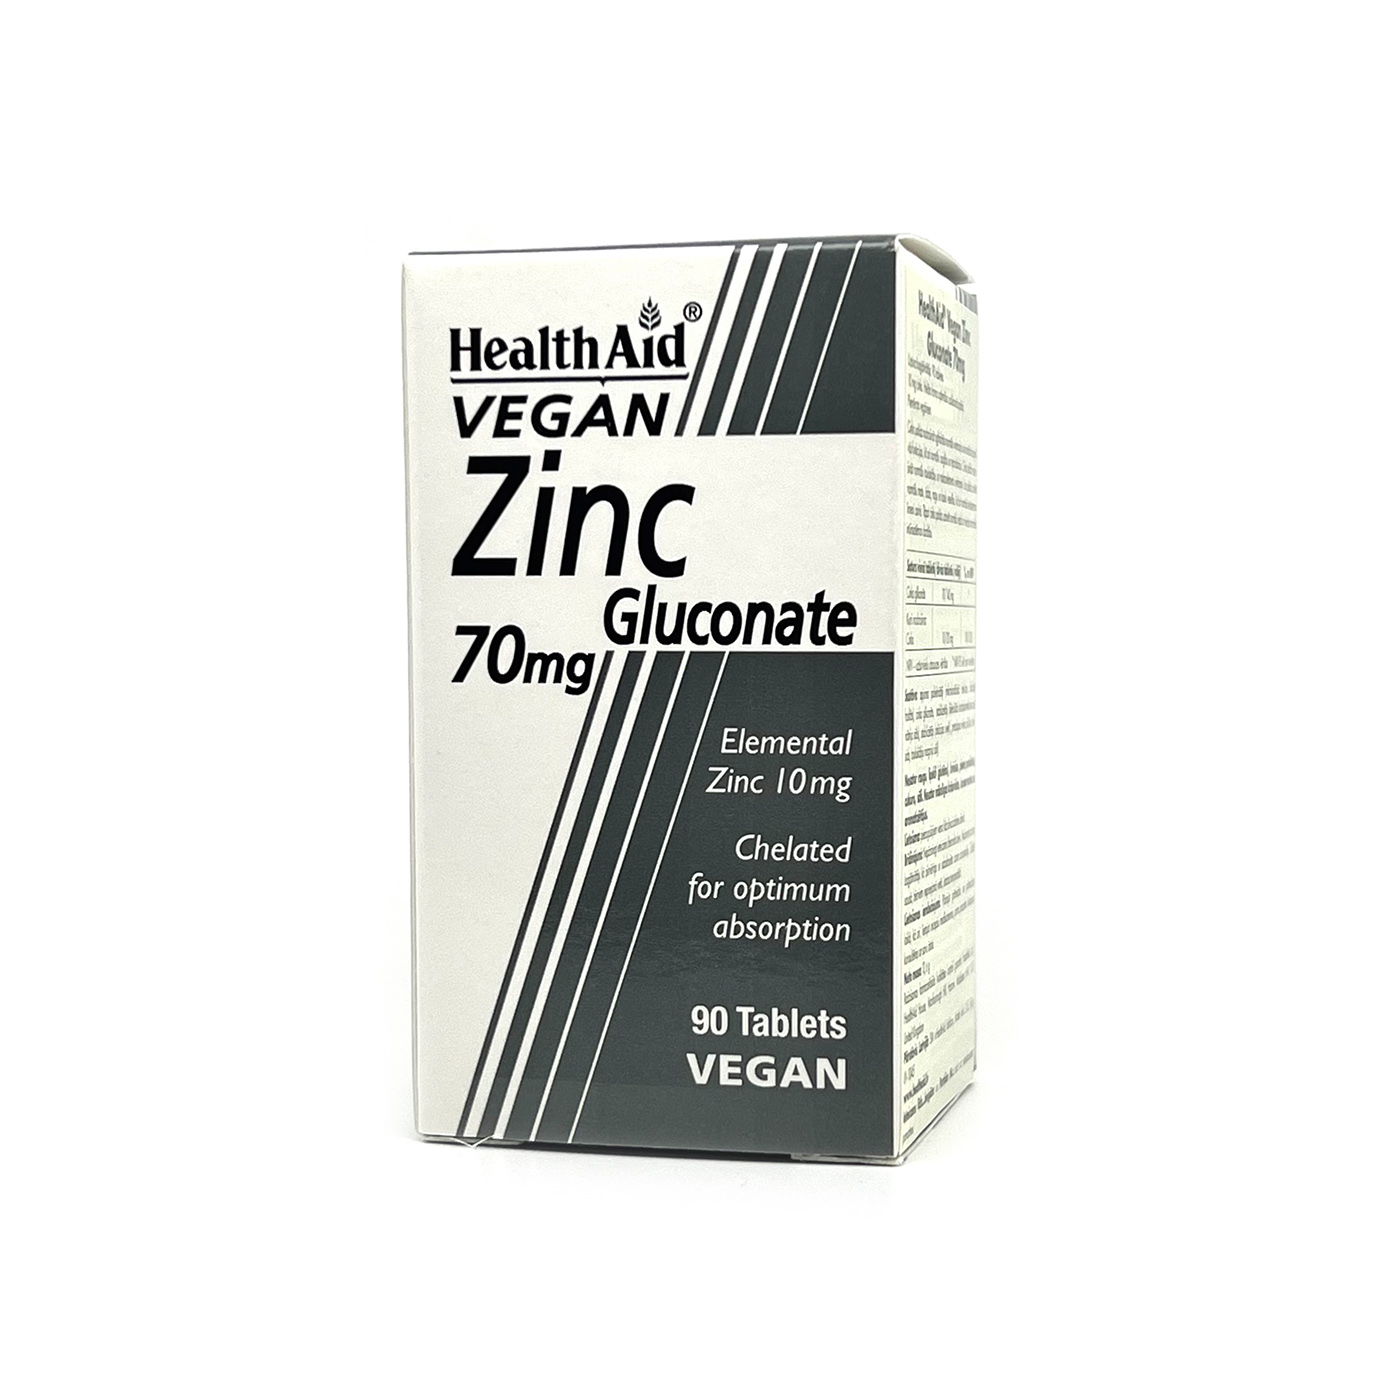 HealthAid Vegan Zinc Gluconate 70mg tabletes N90